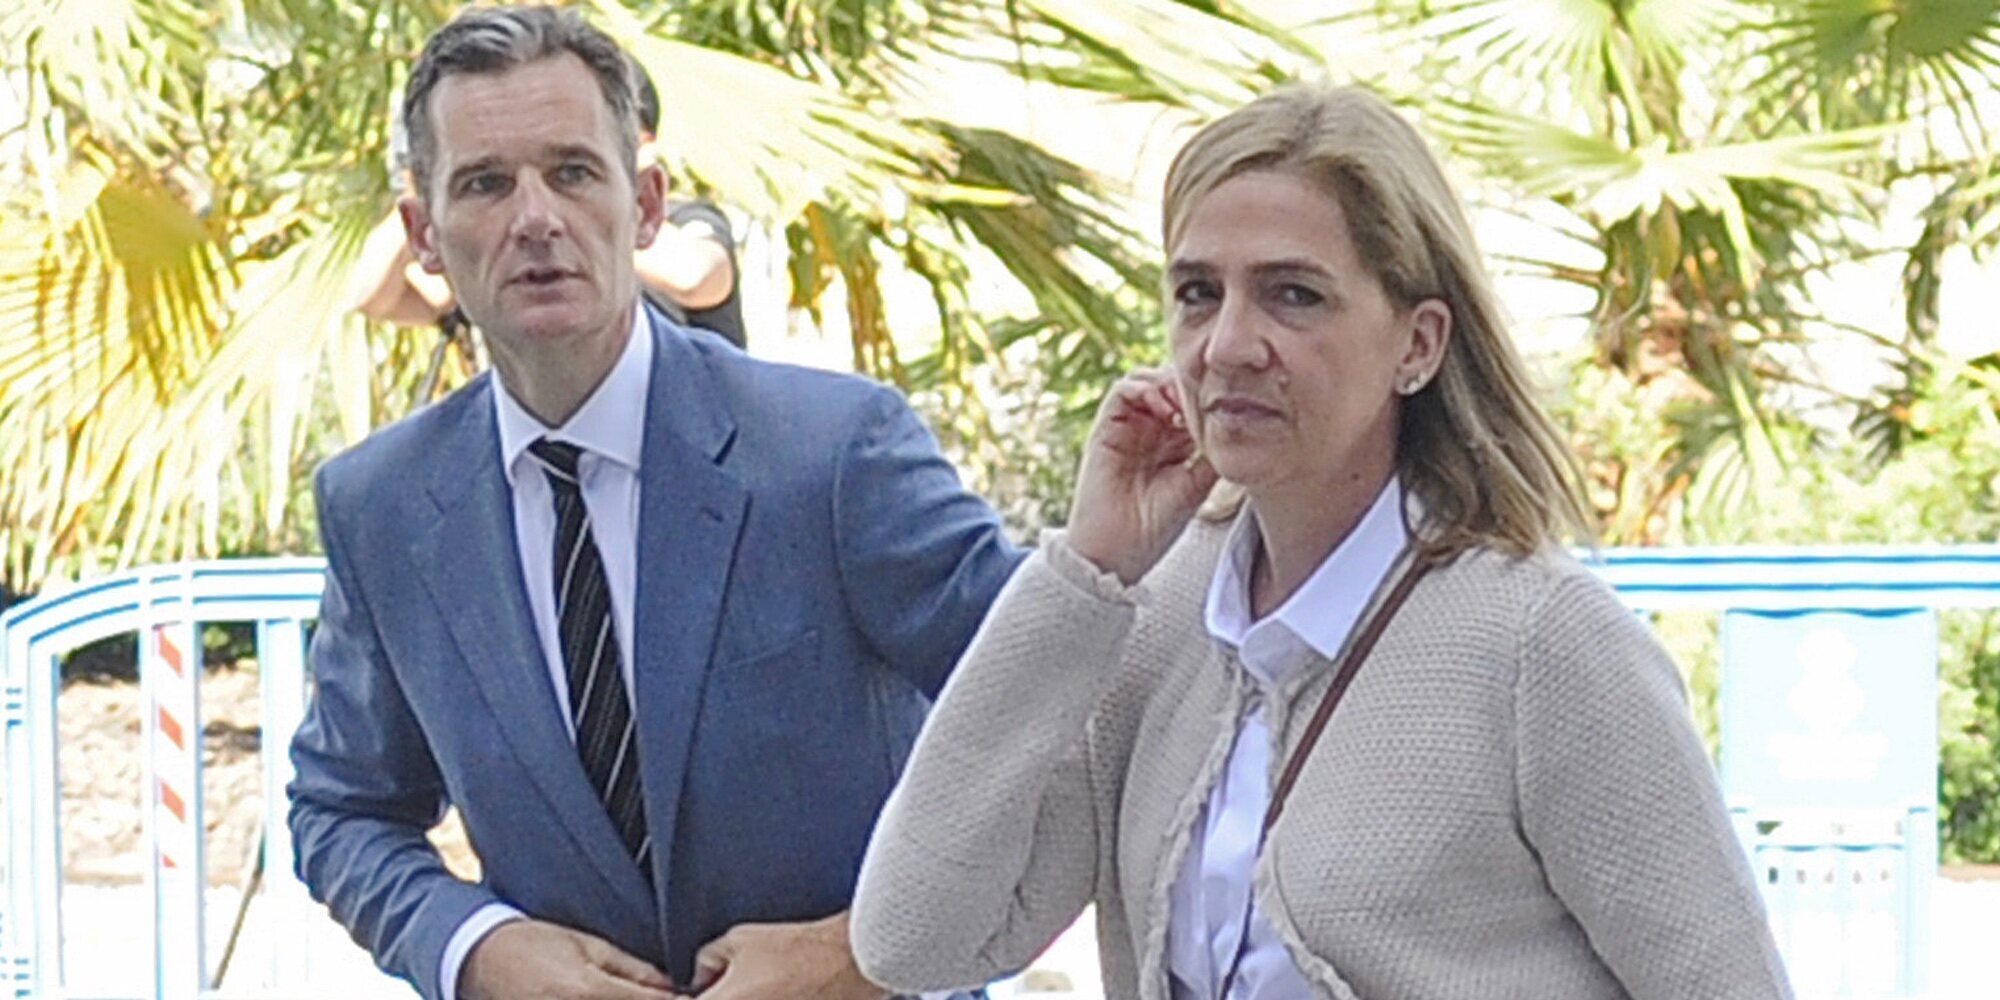 El acuerdo de divorcio entre la Infanta Cristina e Iñaki Urdangarin: dinero, custodia y un plan futuro